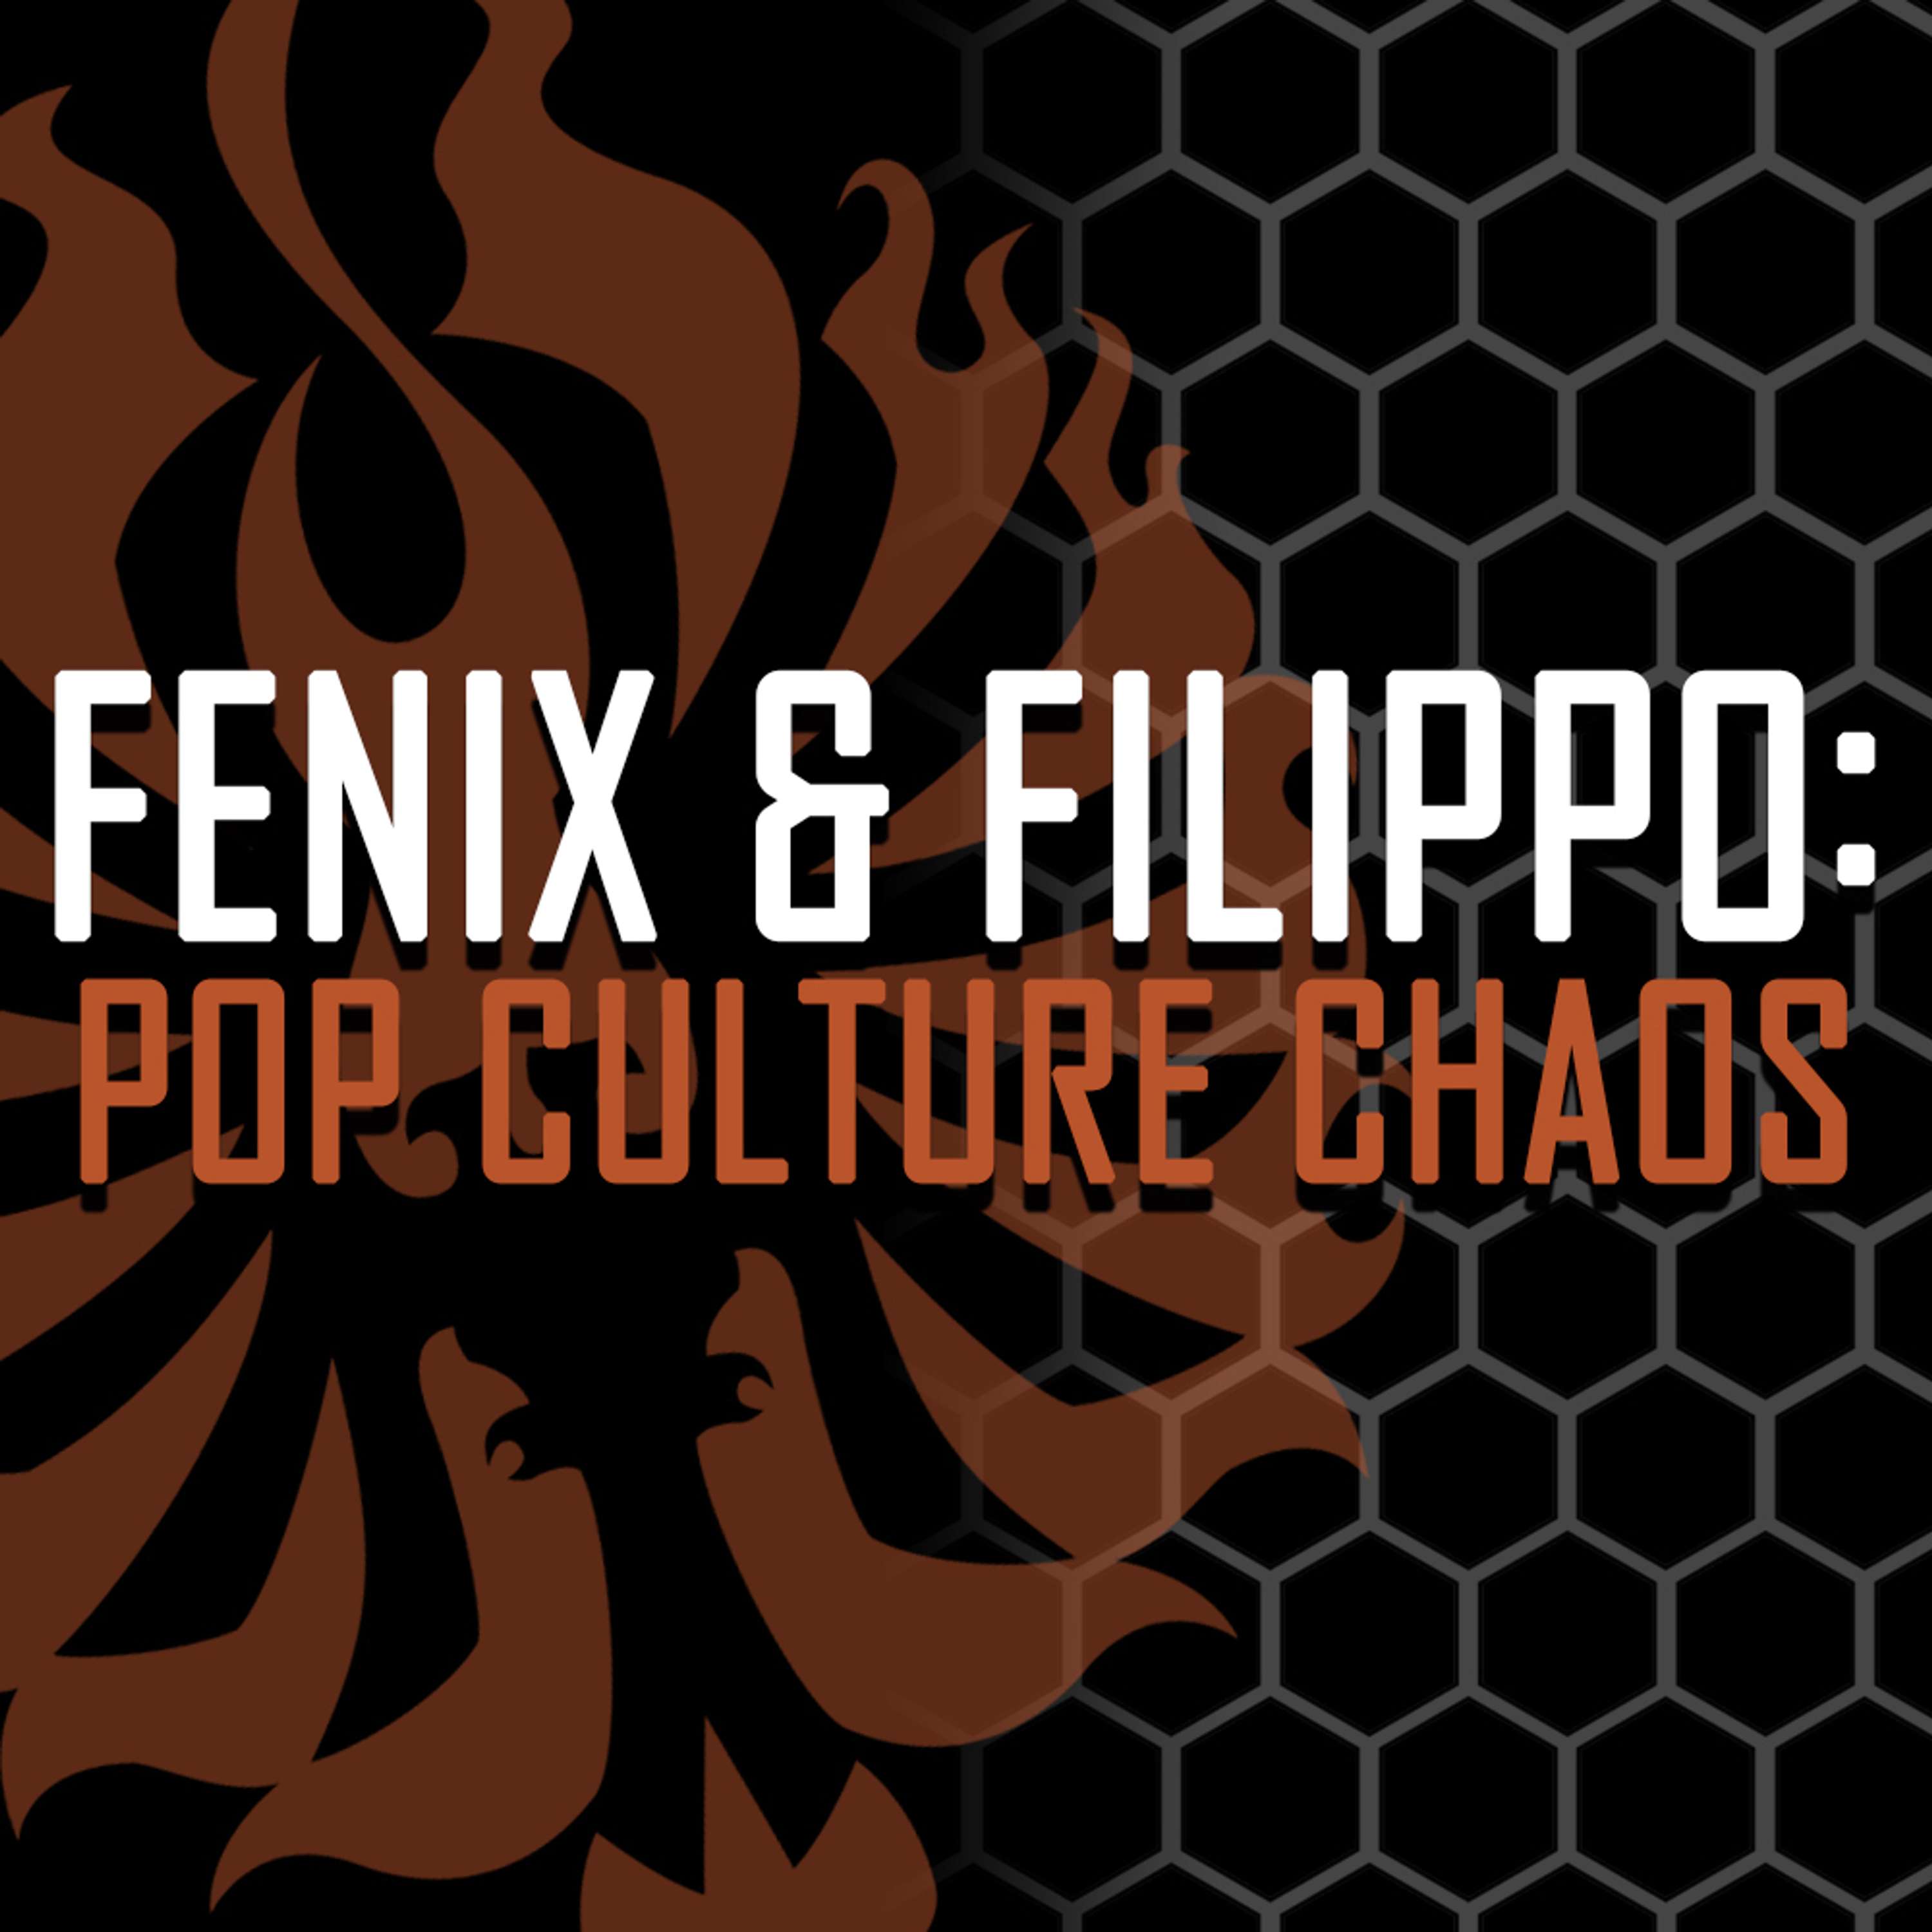 Fenix & Filippo: Pop Culture Chaos - Friday, September 24th 2021 with Nerd News, NFL Fantasy Football Week 3, The G-Man's Matchups, & Kollector Korner